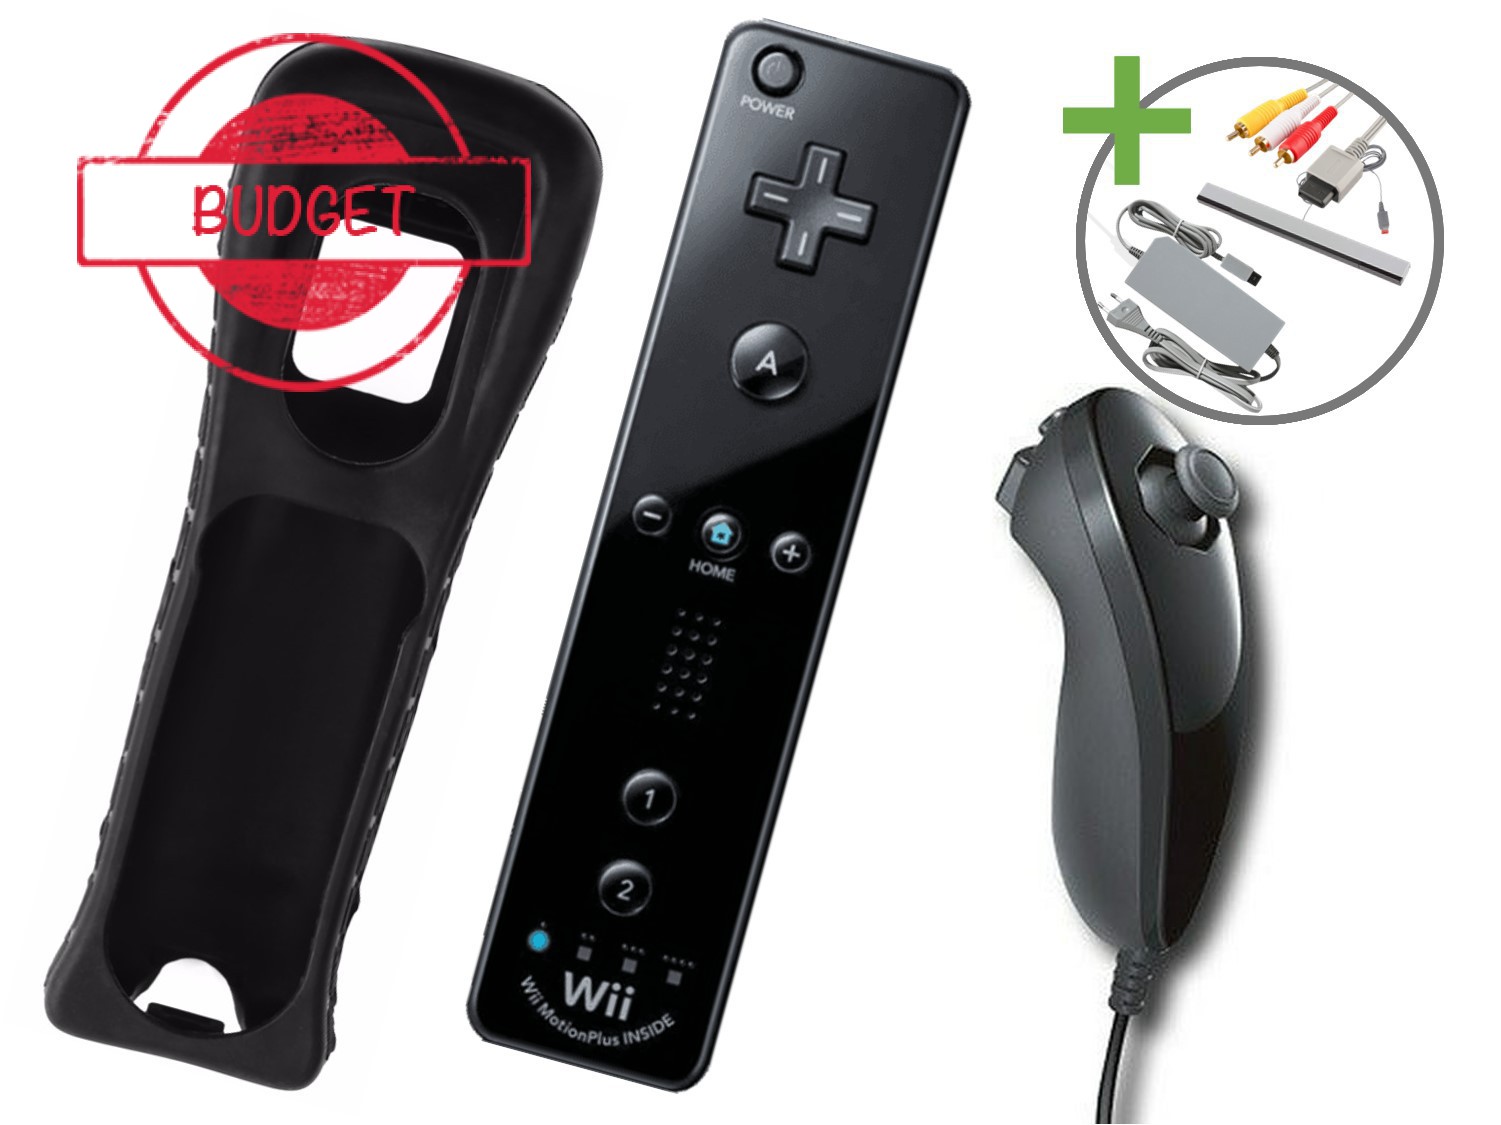 Nintendo Wii Starter Pack - Mario Kart Motion Plus Black Edition - Budget - Wii Hardware - 3